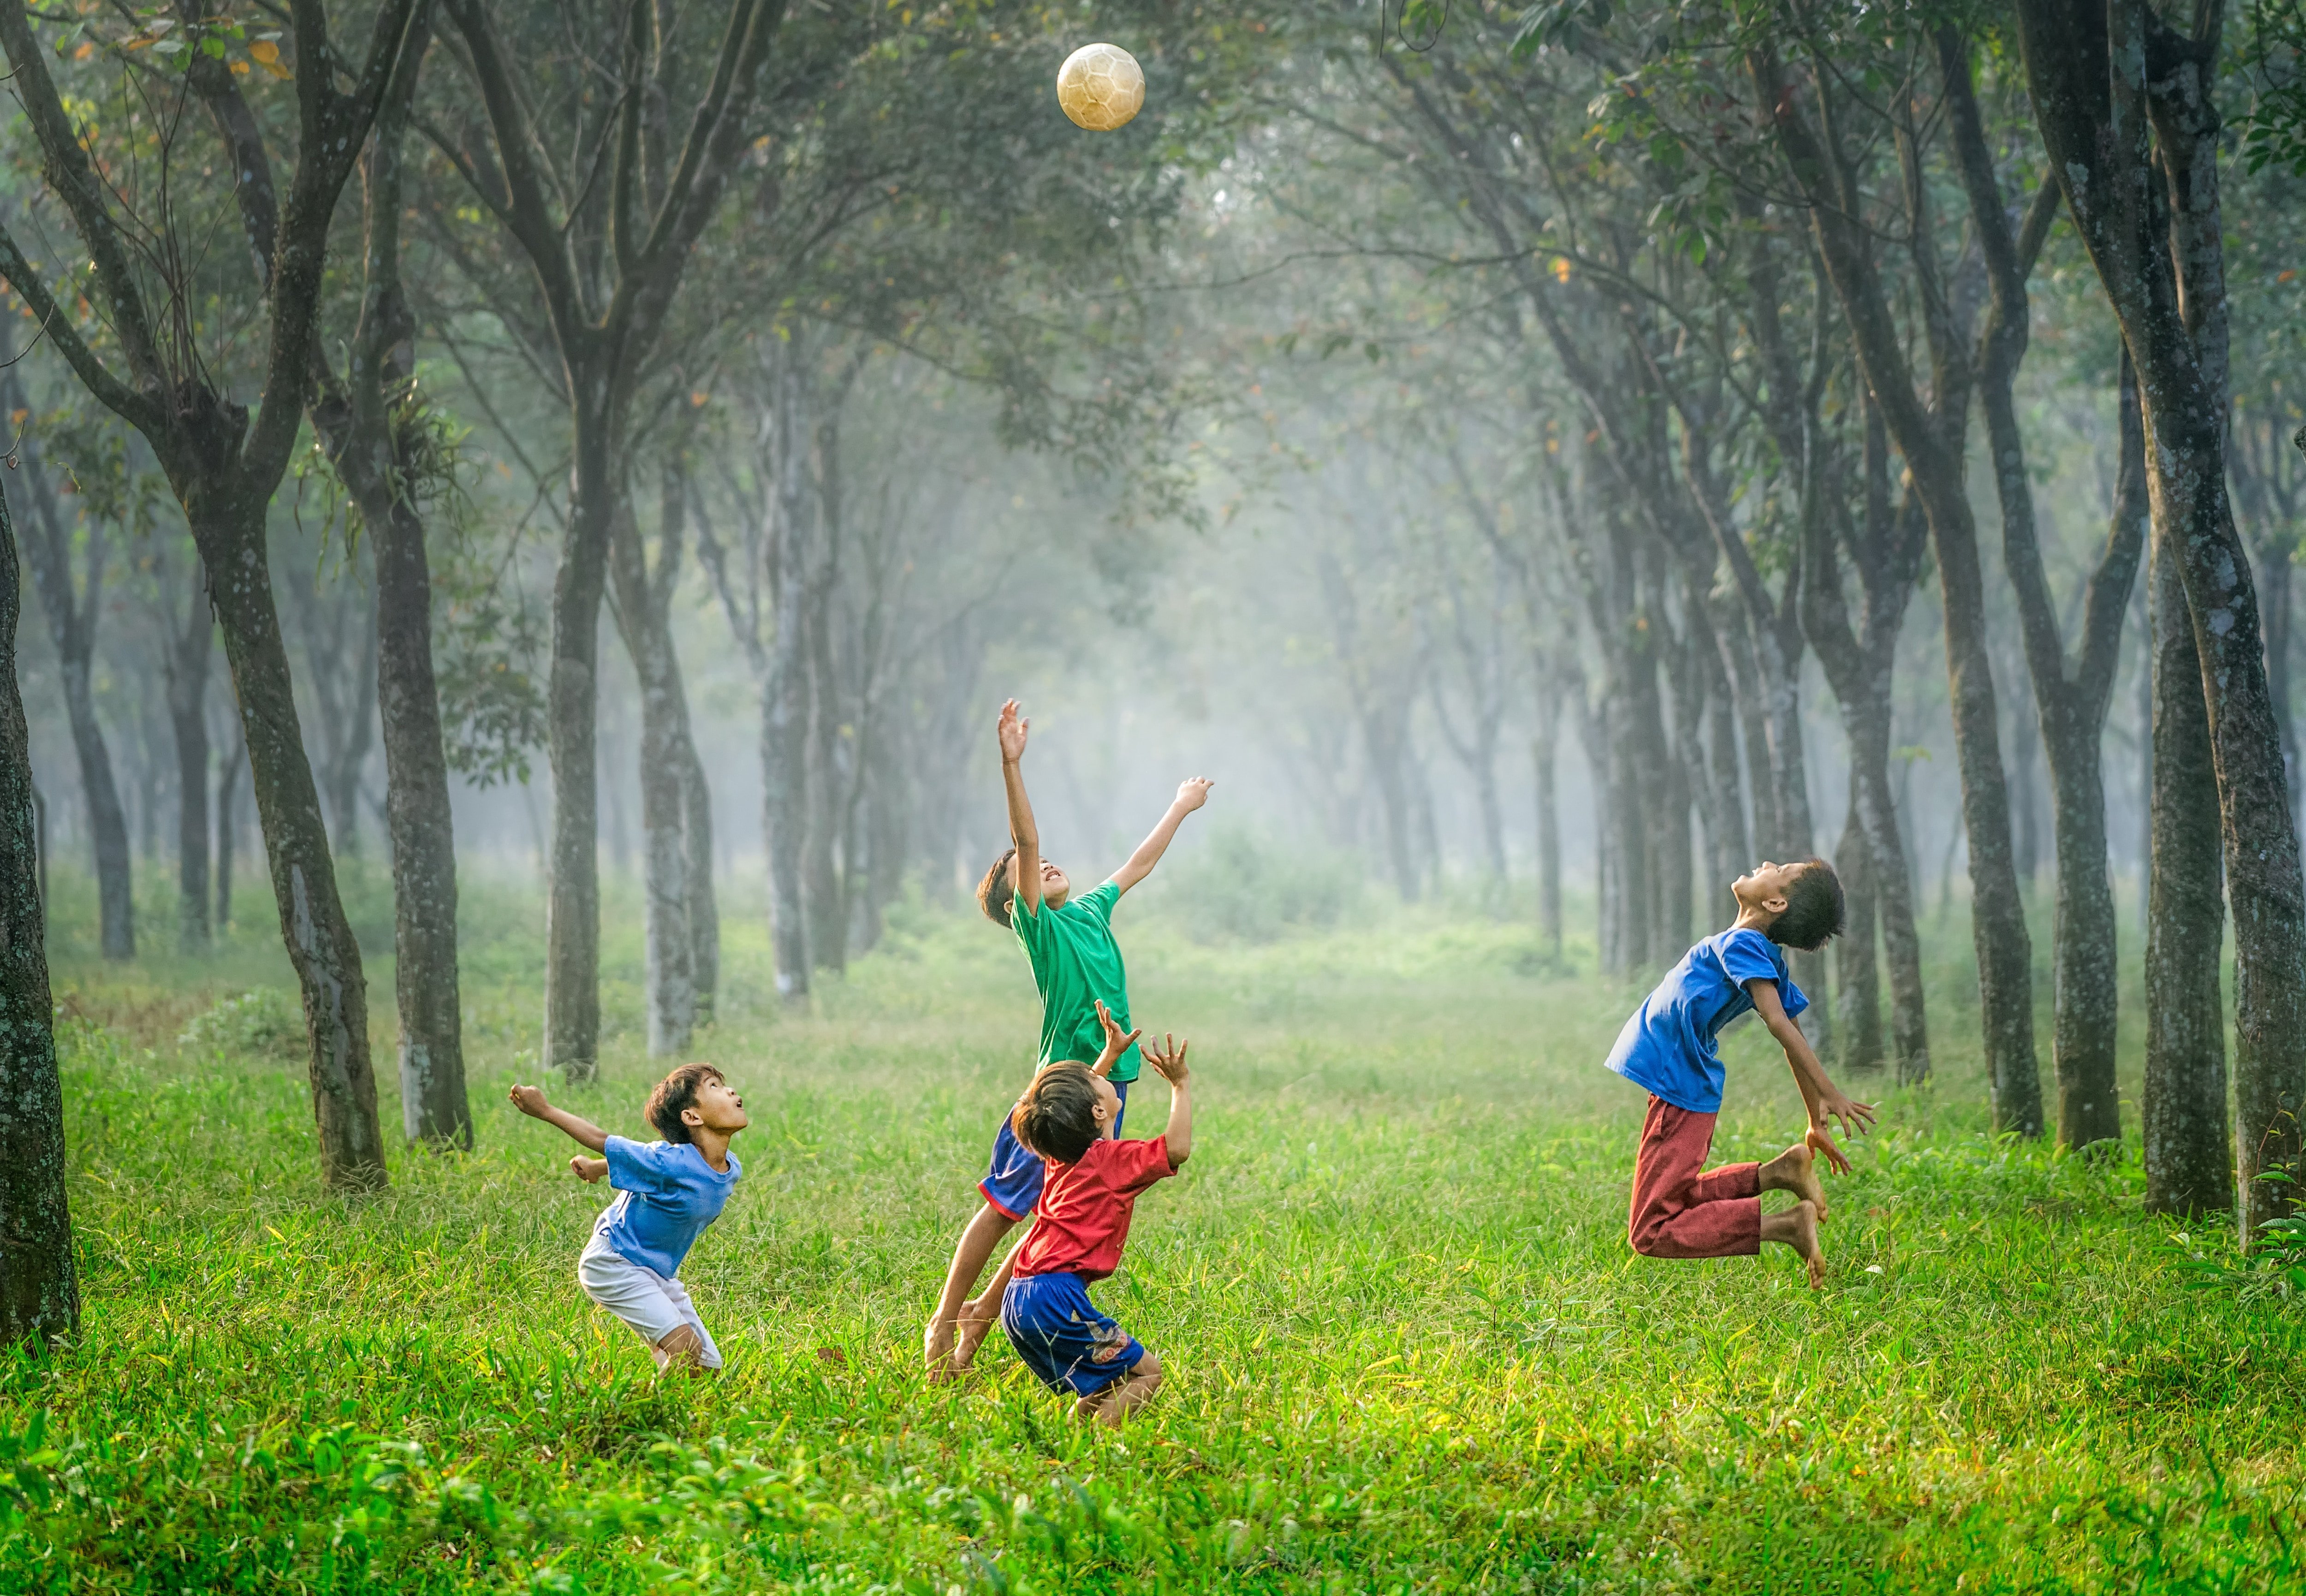 Children playing outdoors.  | Source: Unsplash